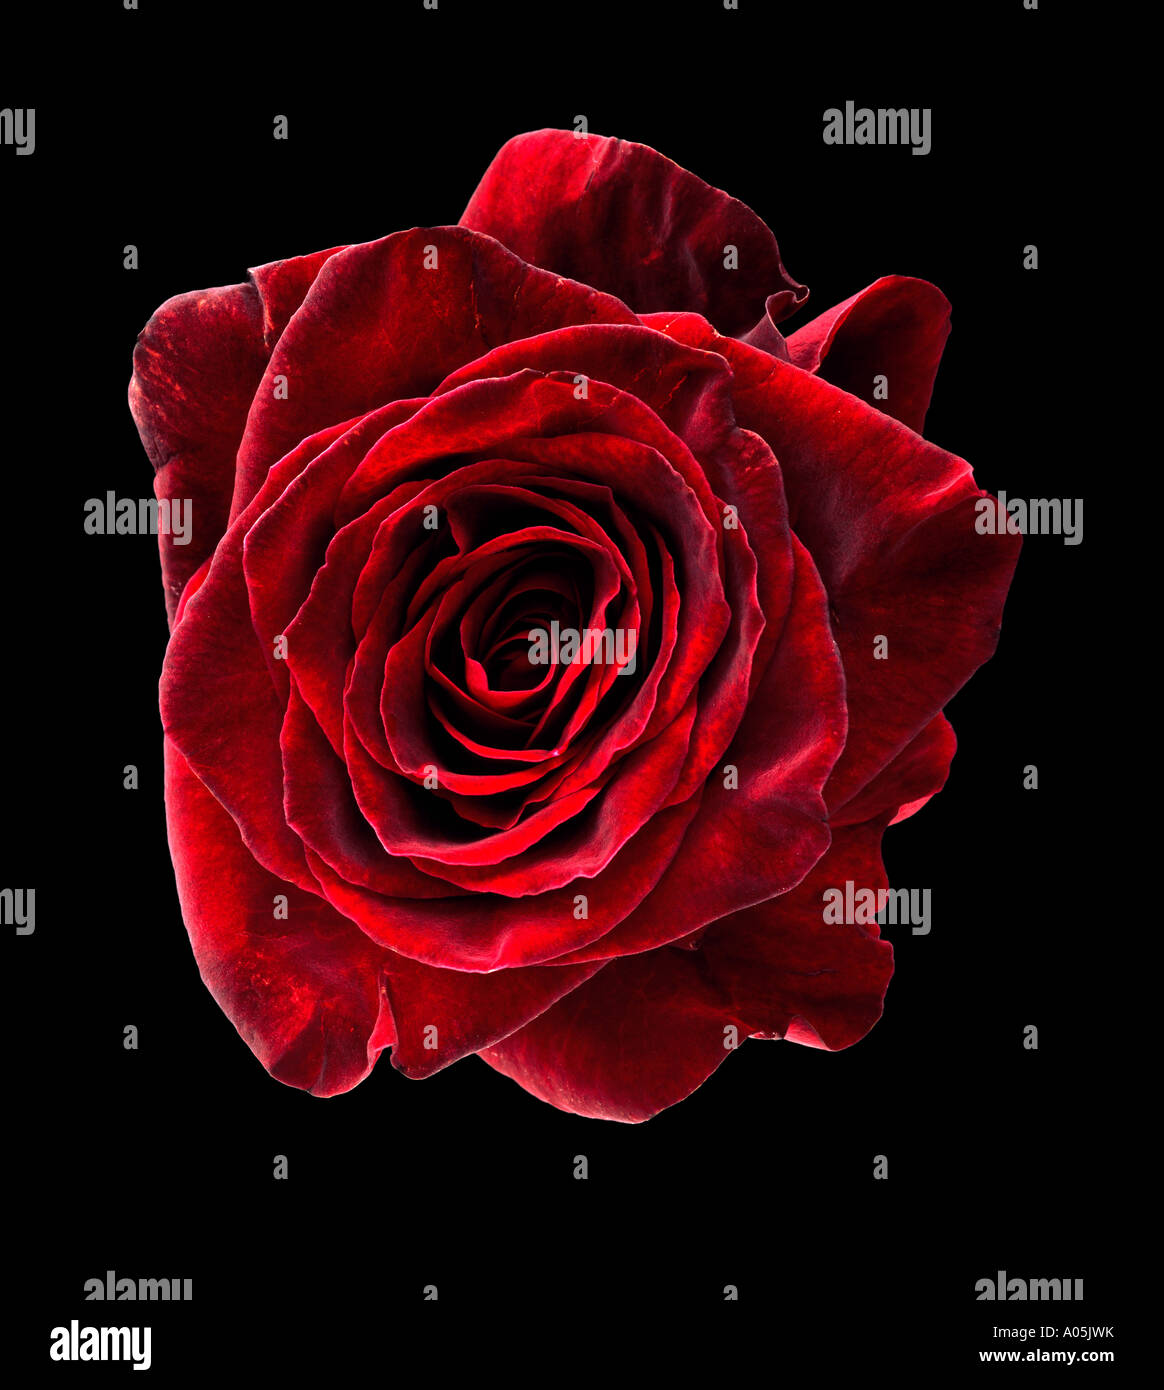 A single Red Velvet Rose on a Black background Stock Photo